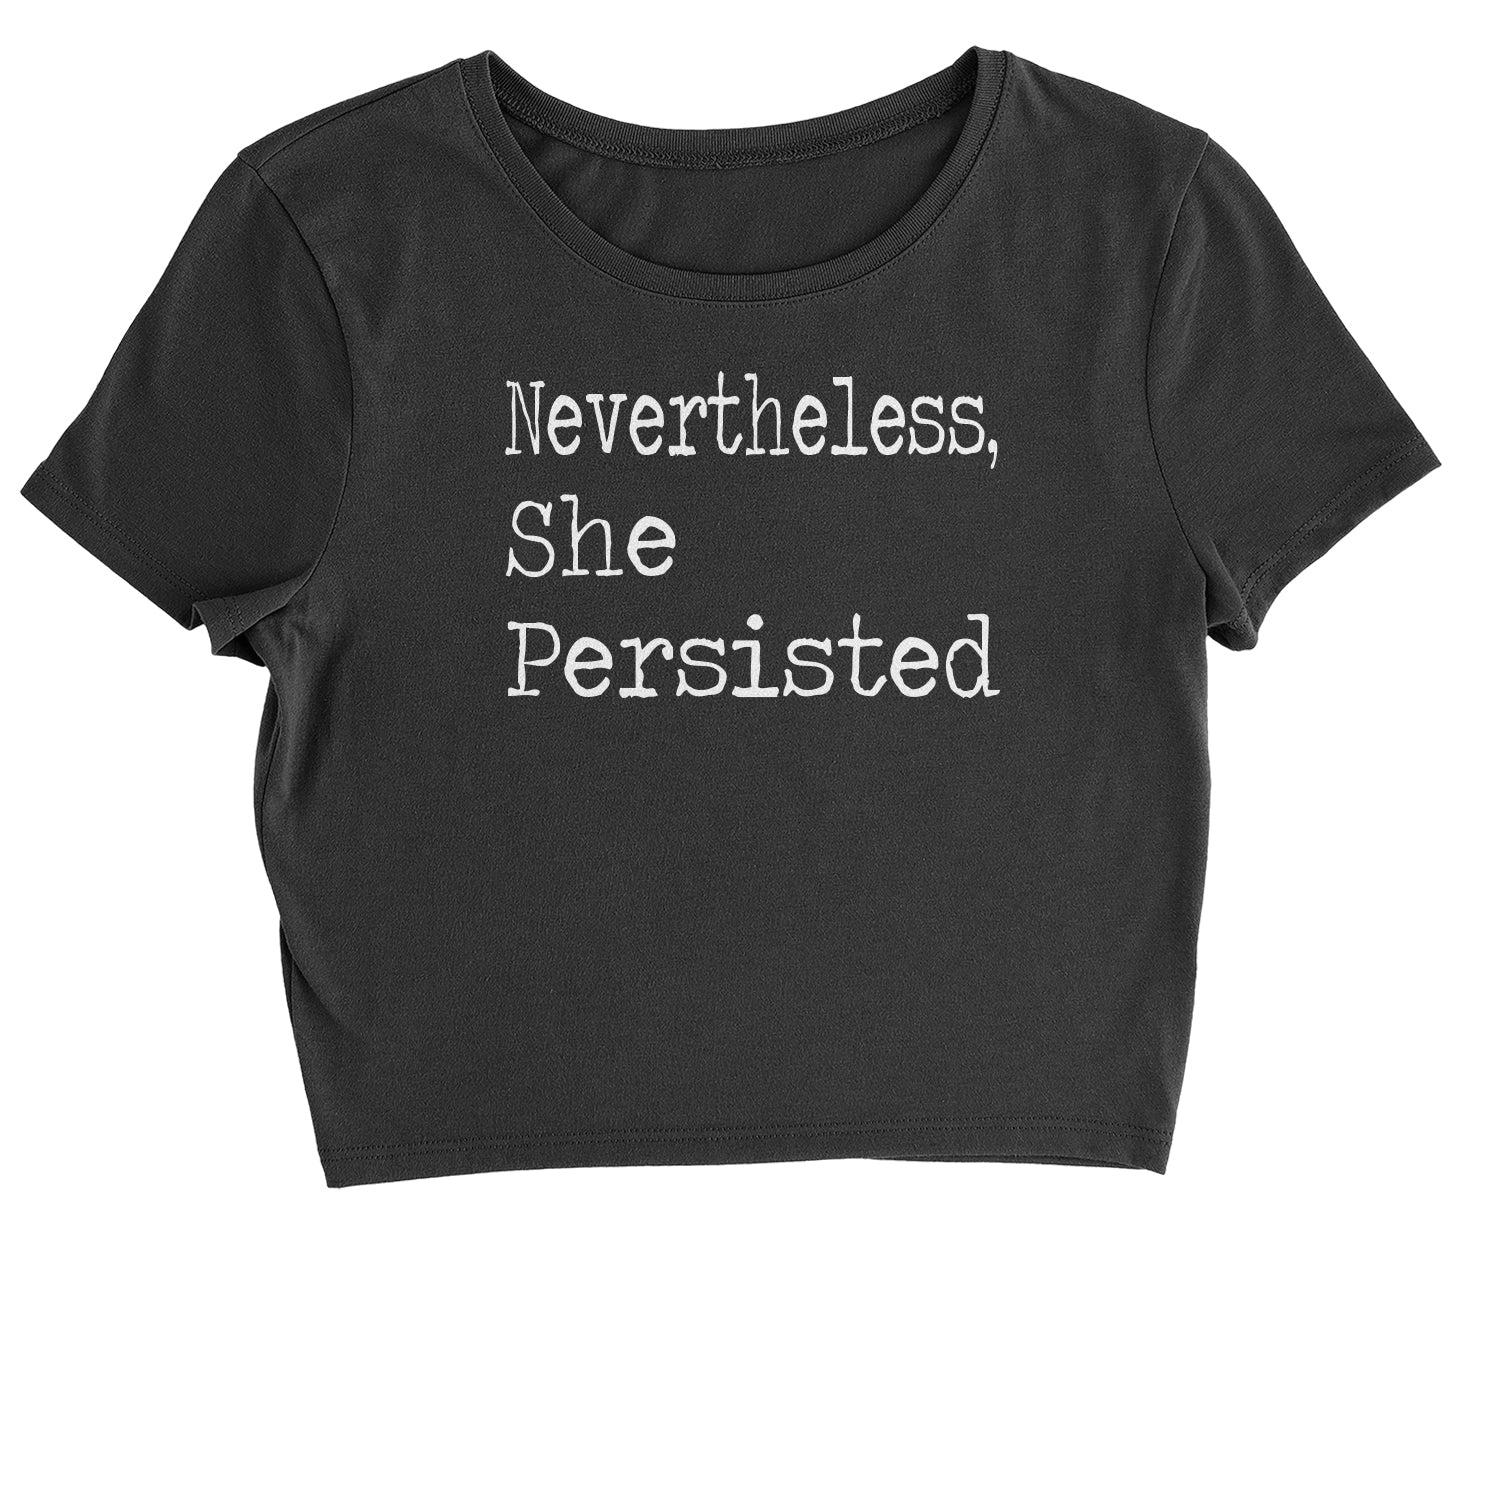 Nevertheless, She Persisted Cropped T-Shirt 2020, feminism, feminist, kamala, letlizspeak, mamala, mcconnell, mitch, momala, mommala by Expression Tees